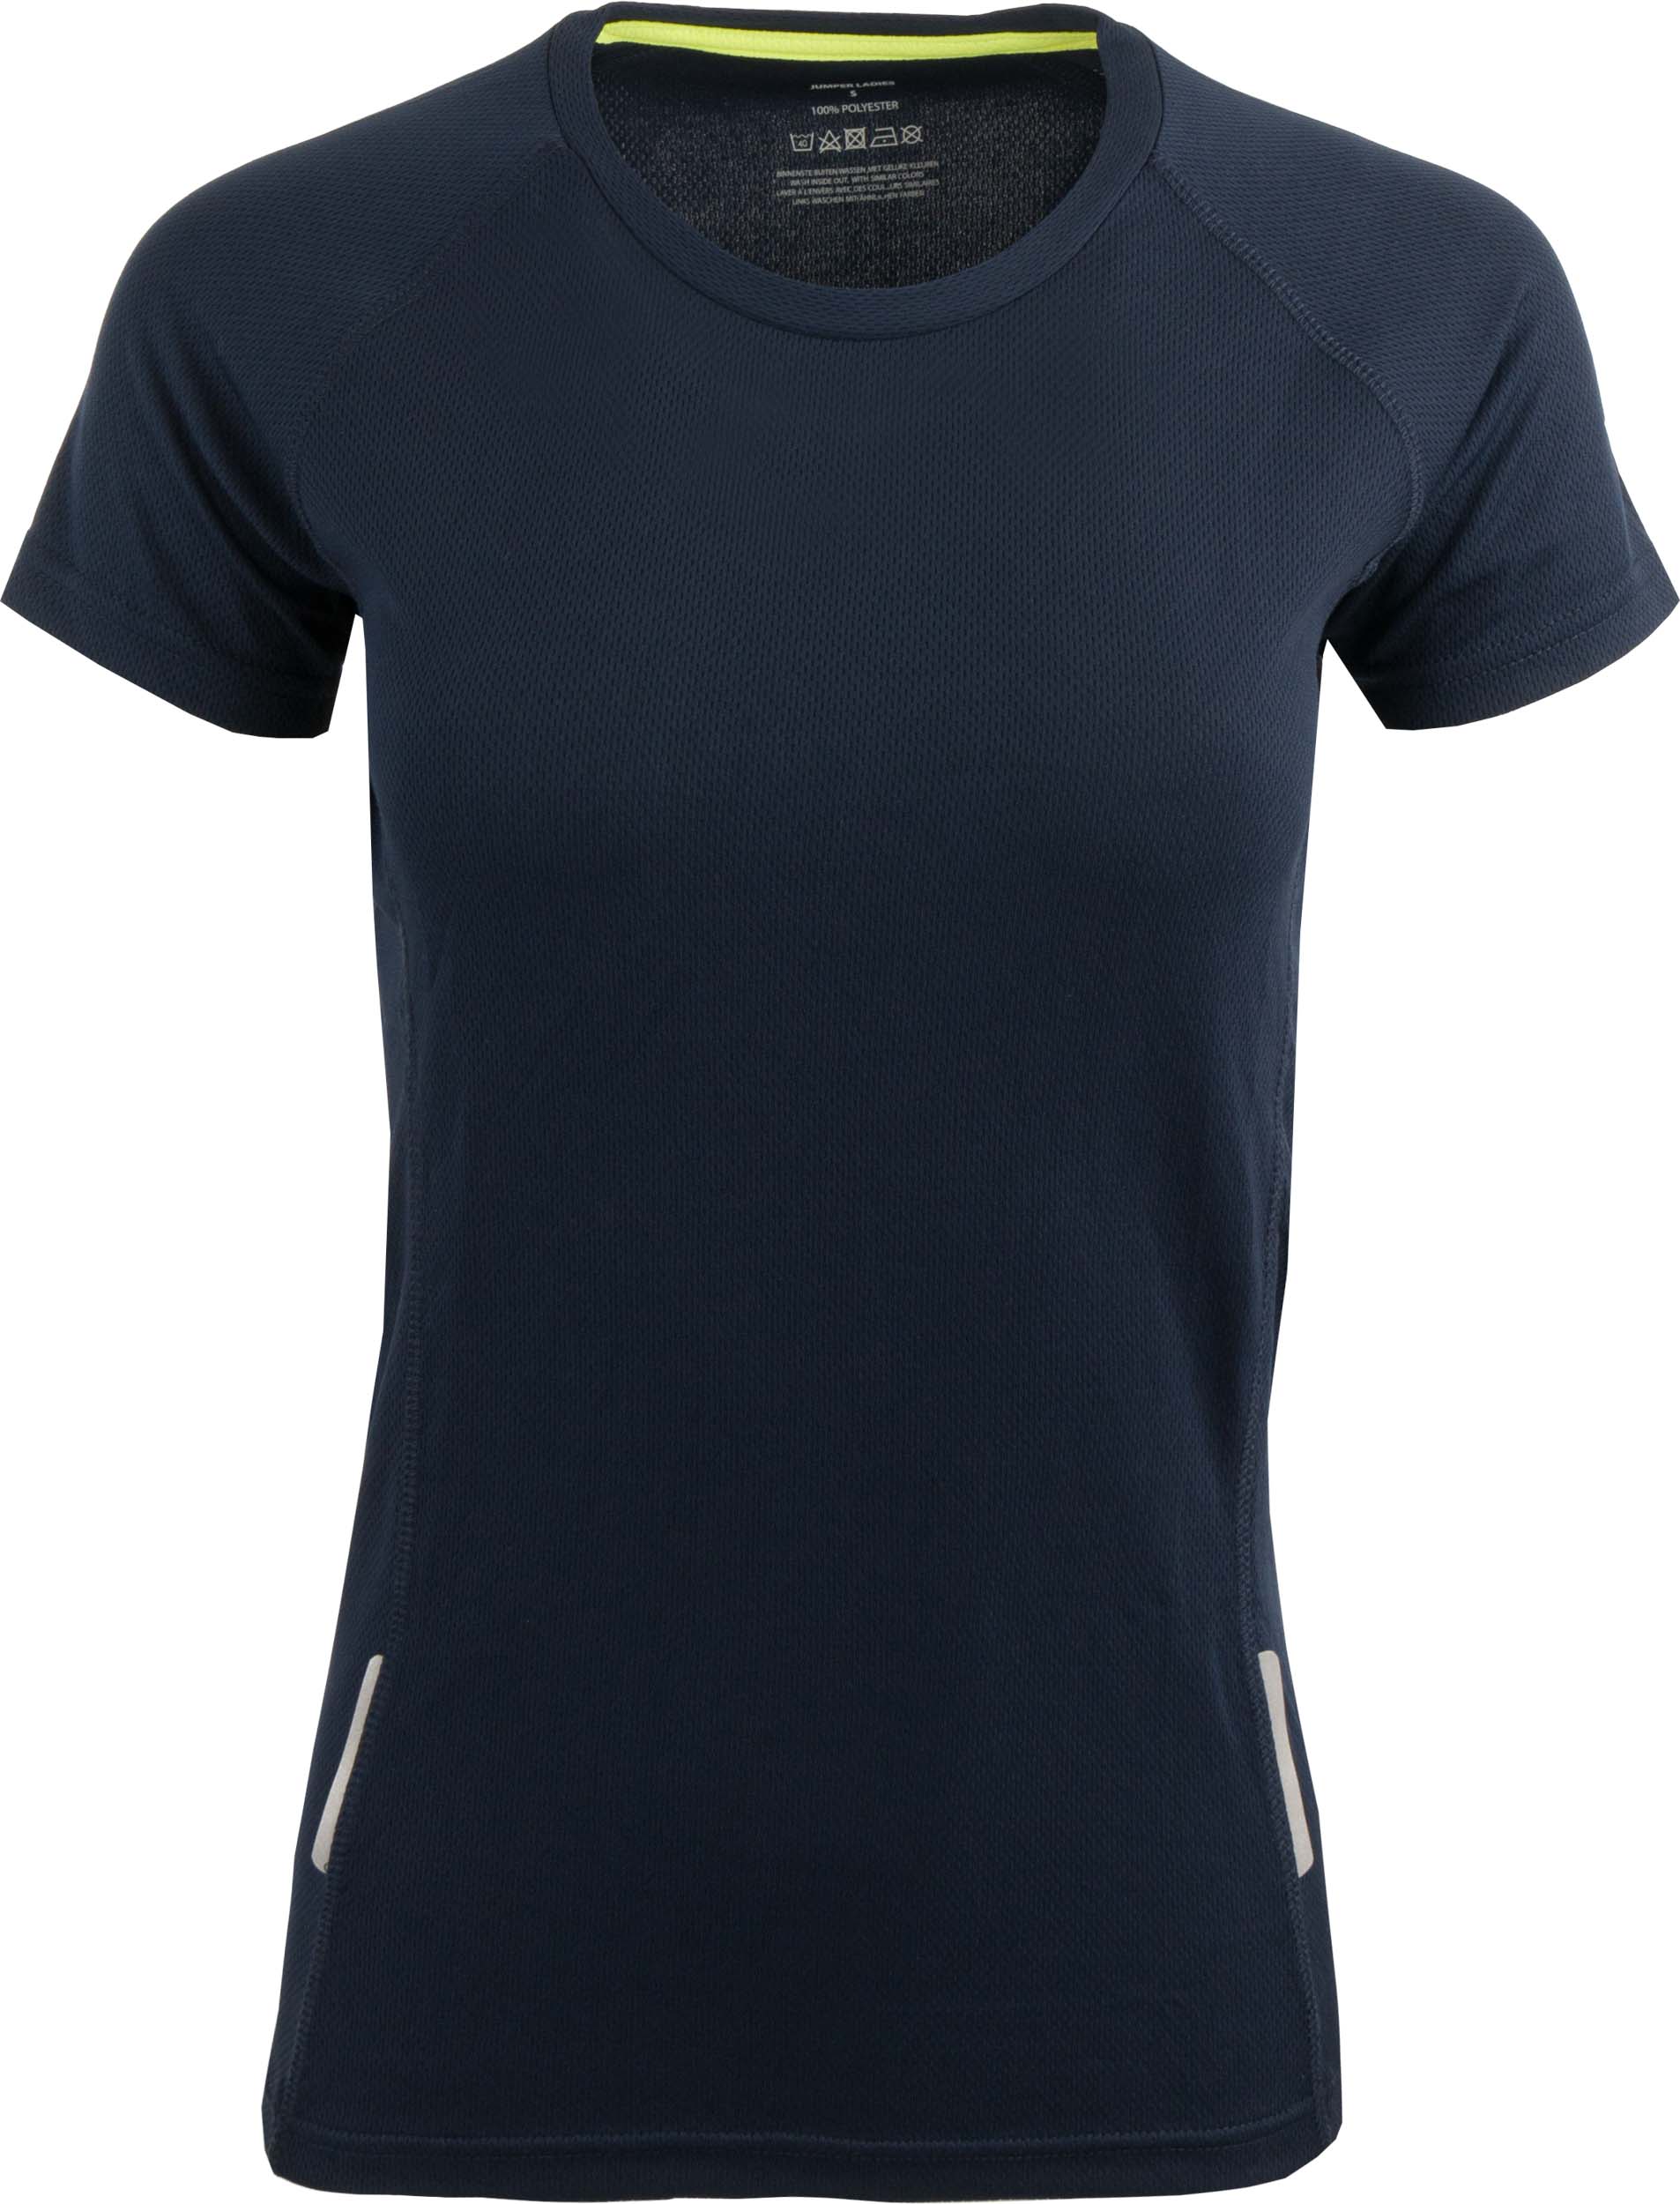 Sportovní triko JUMPER Ladies navy|XS